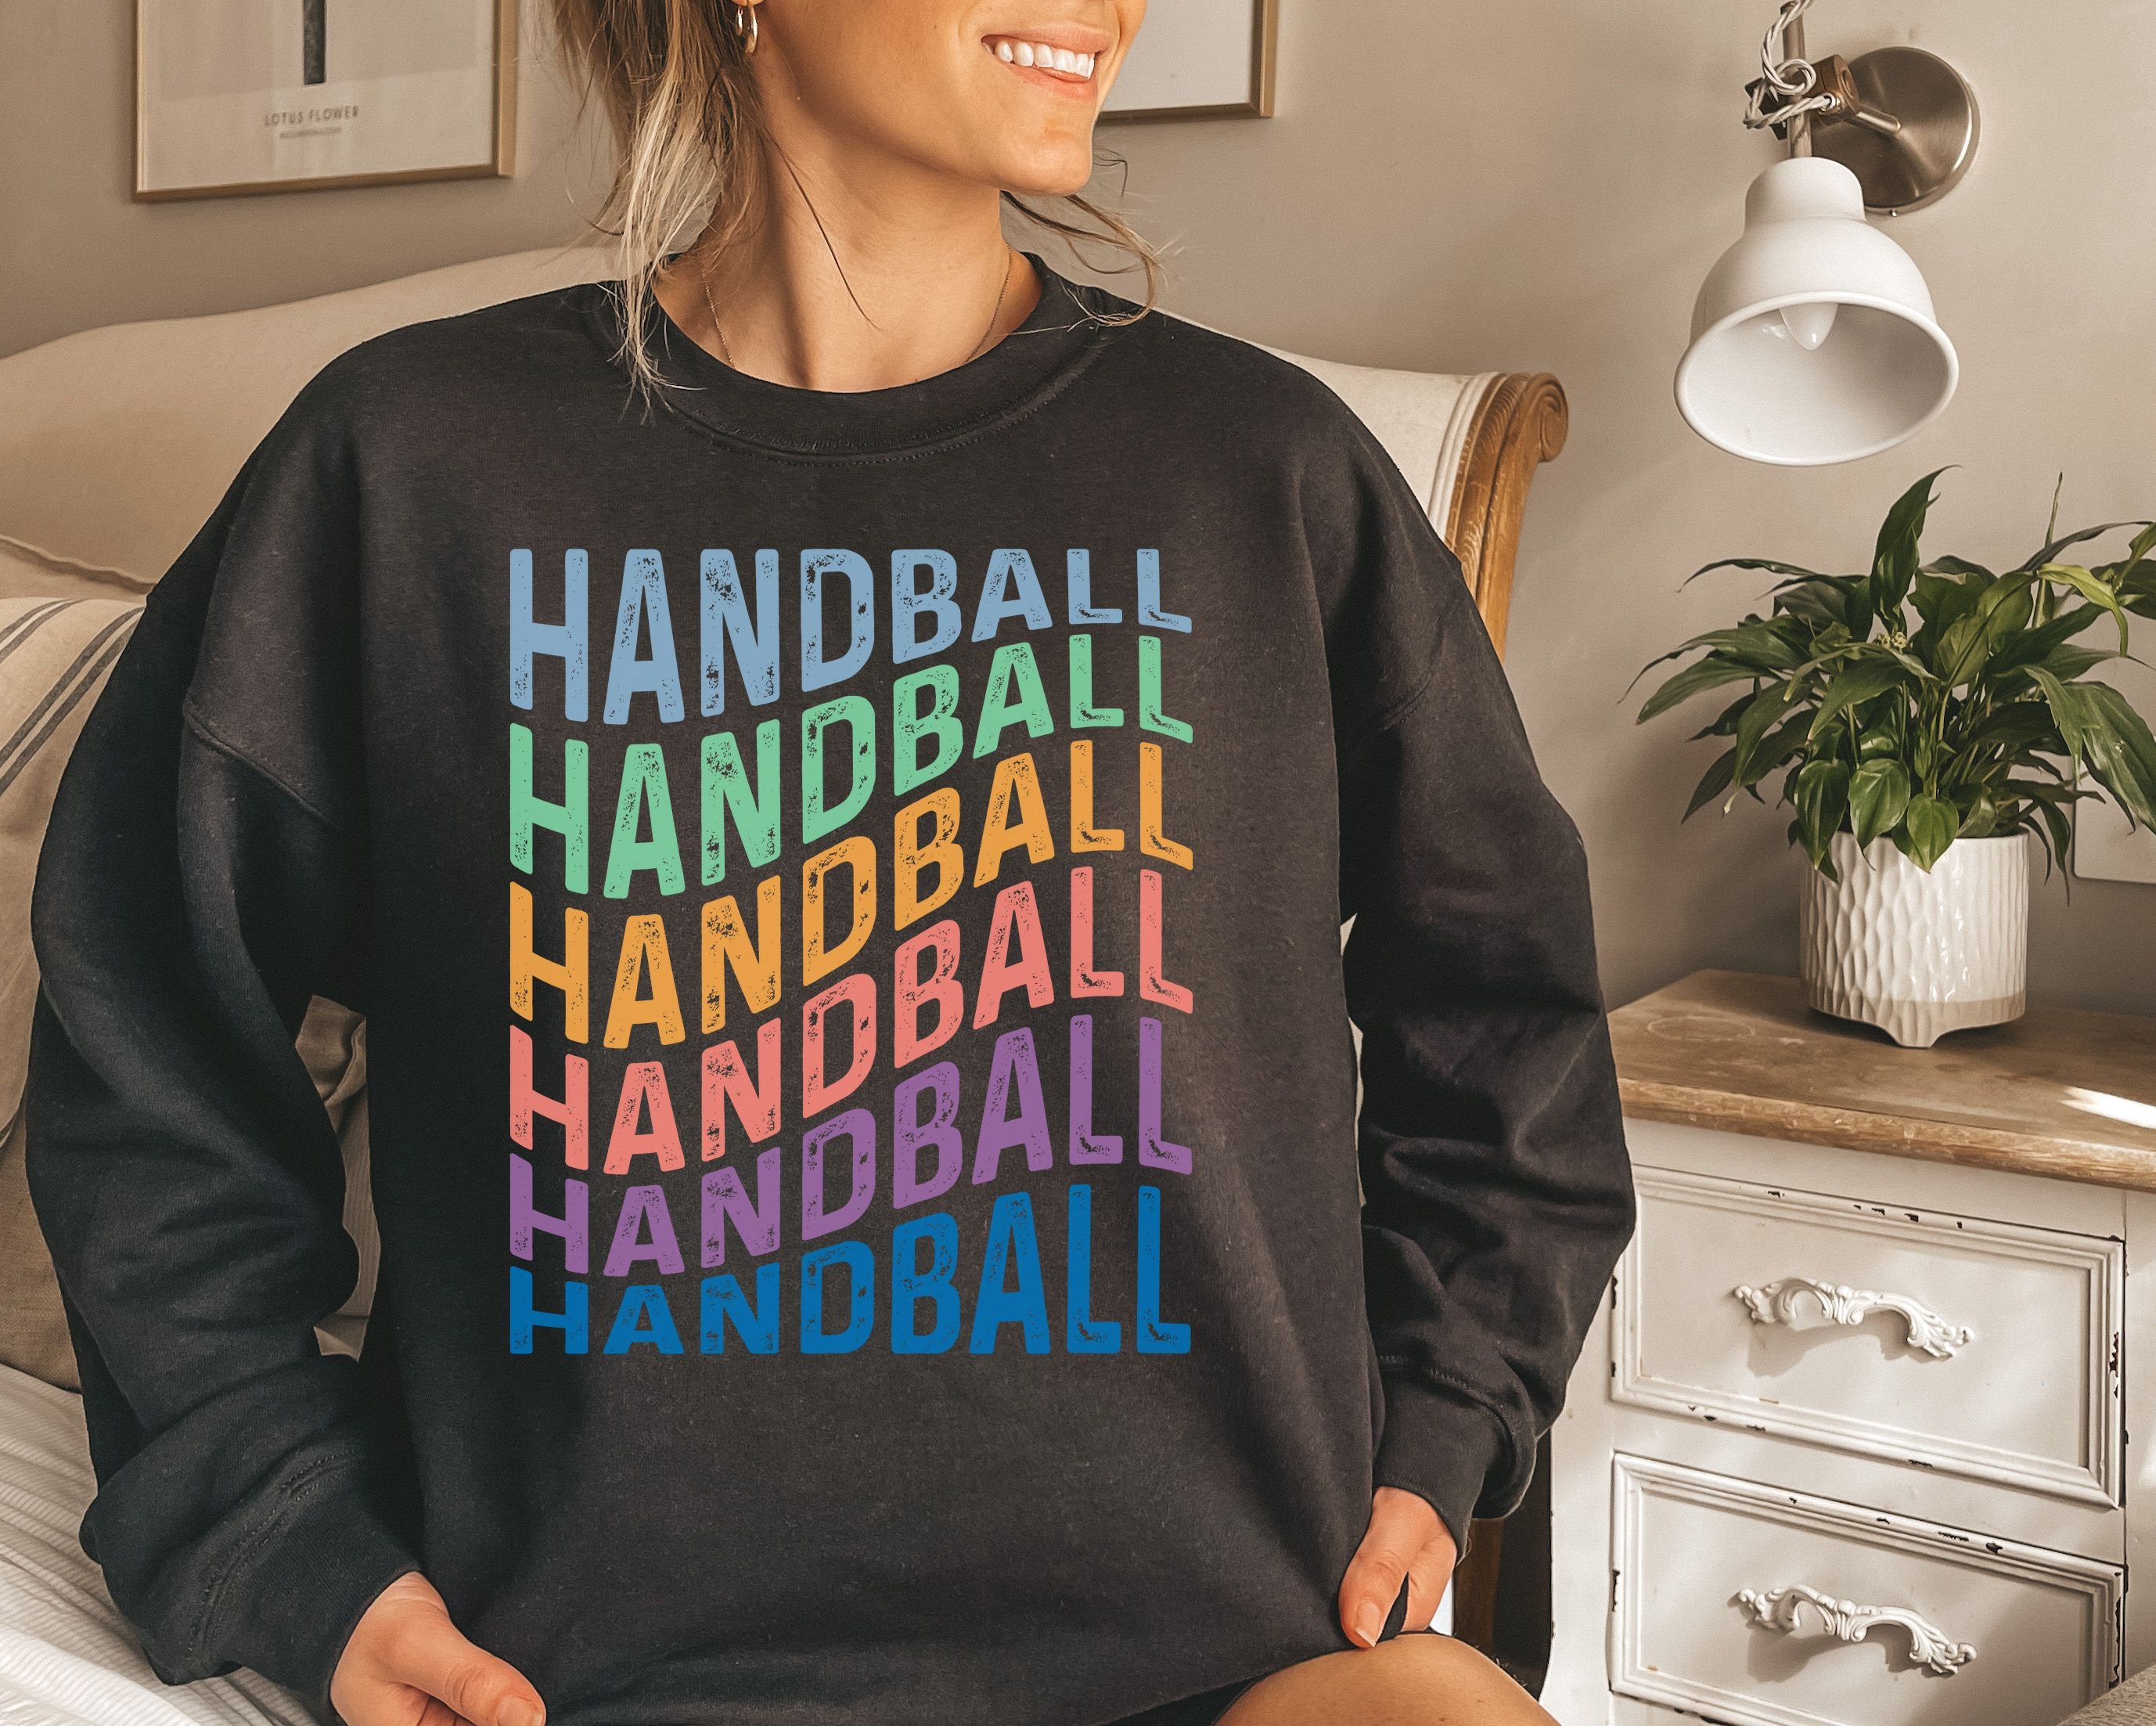 Girl's hanndball gang t-shirt - T-shirts and polos - Textile - Handball wear